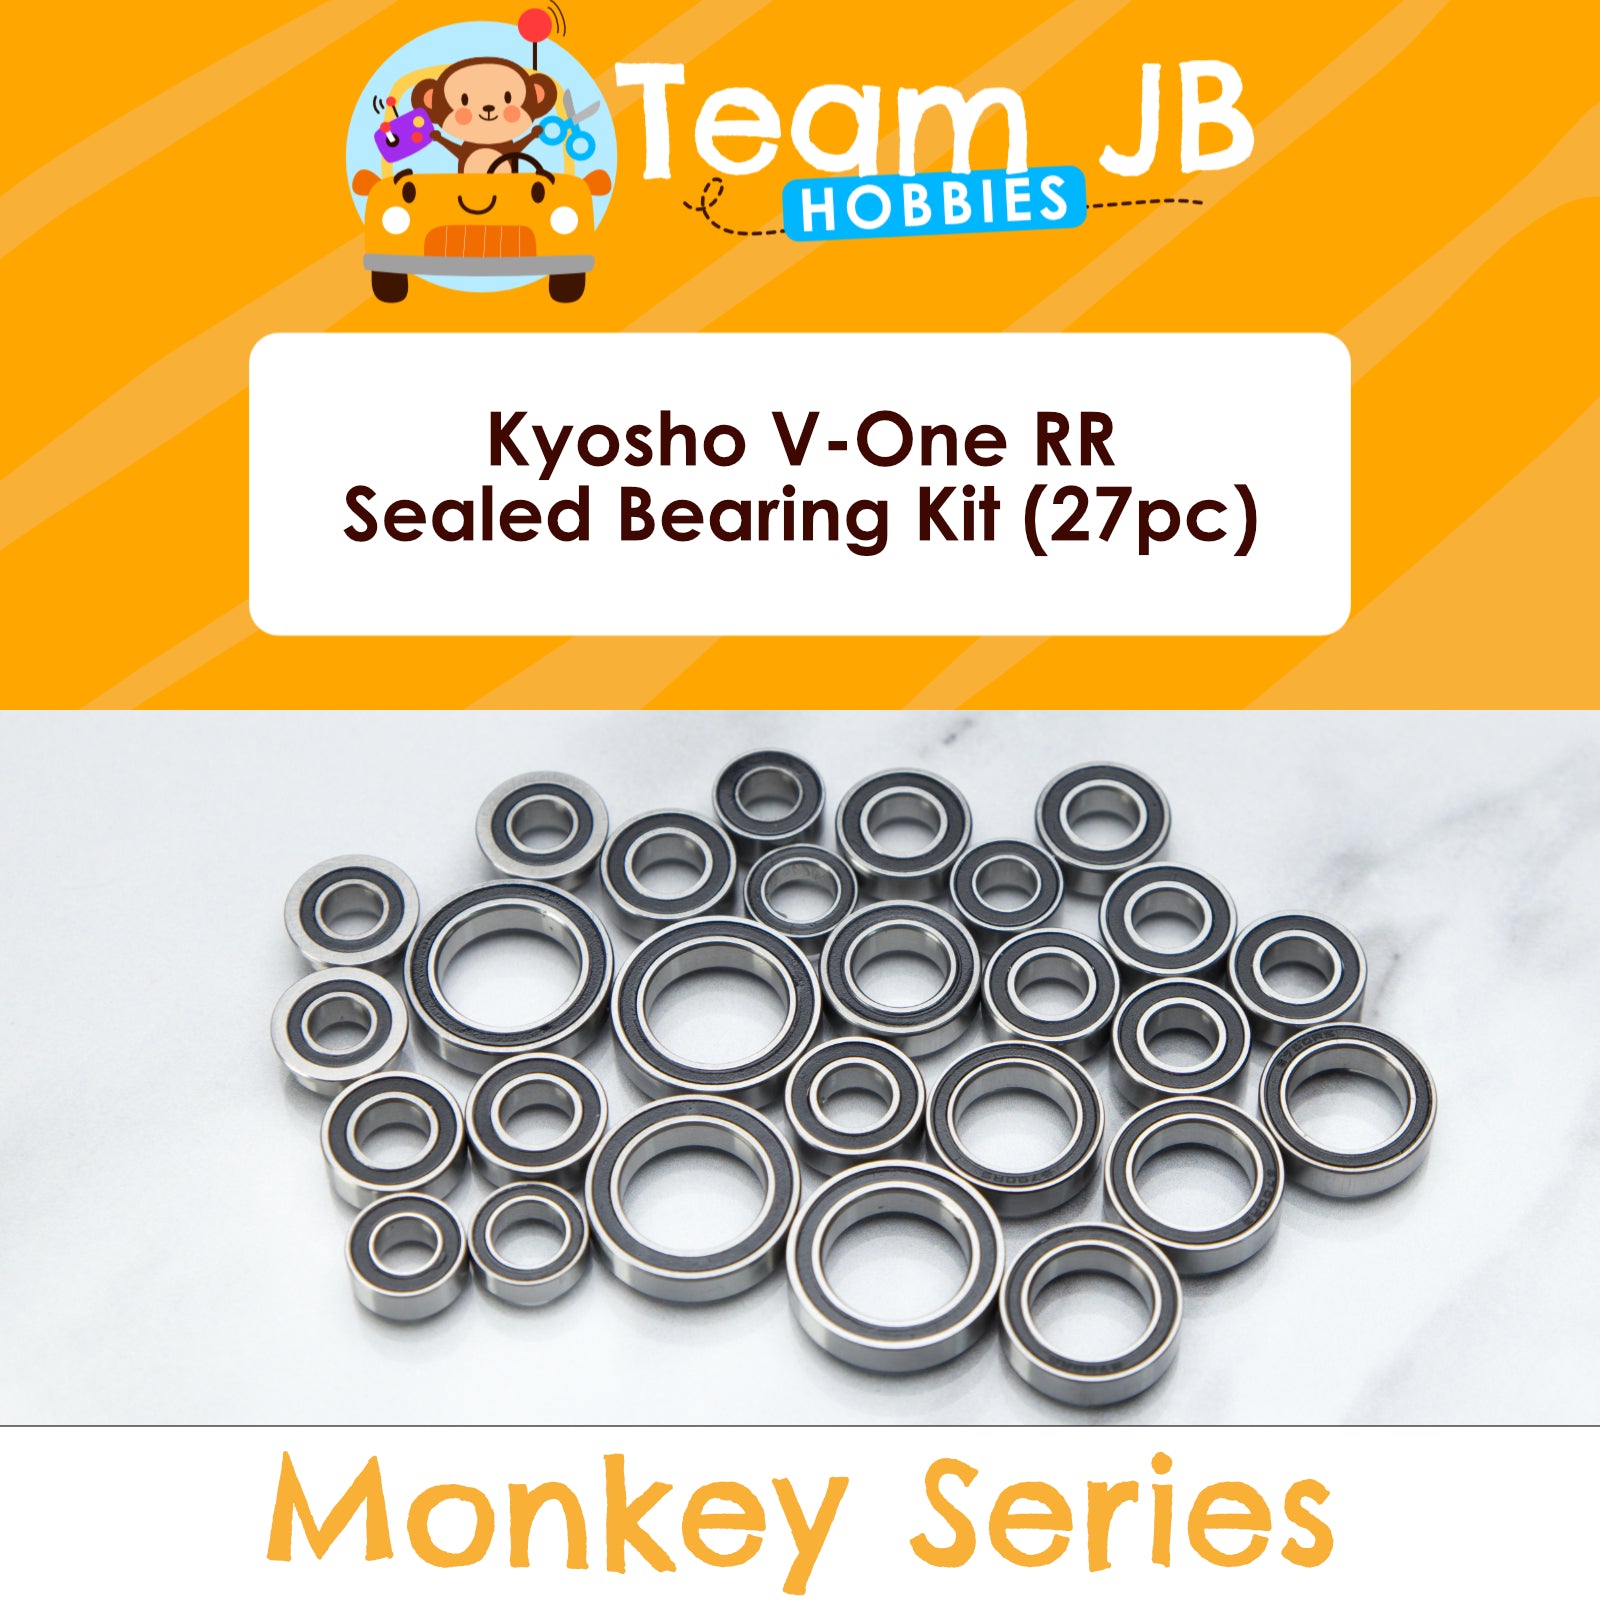 Kyosho V-One RR - Sealed Bearing Kit